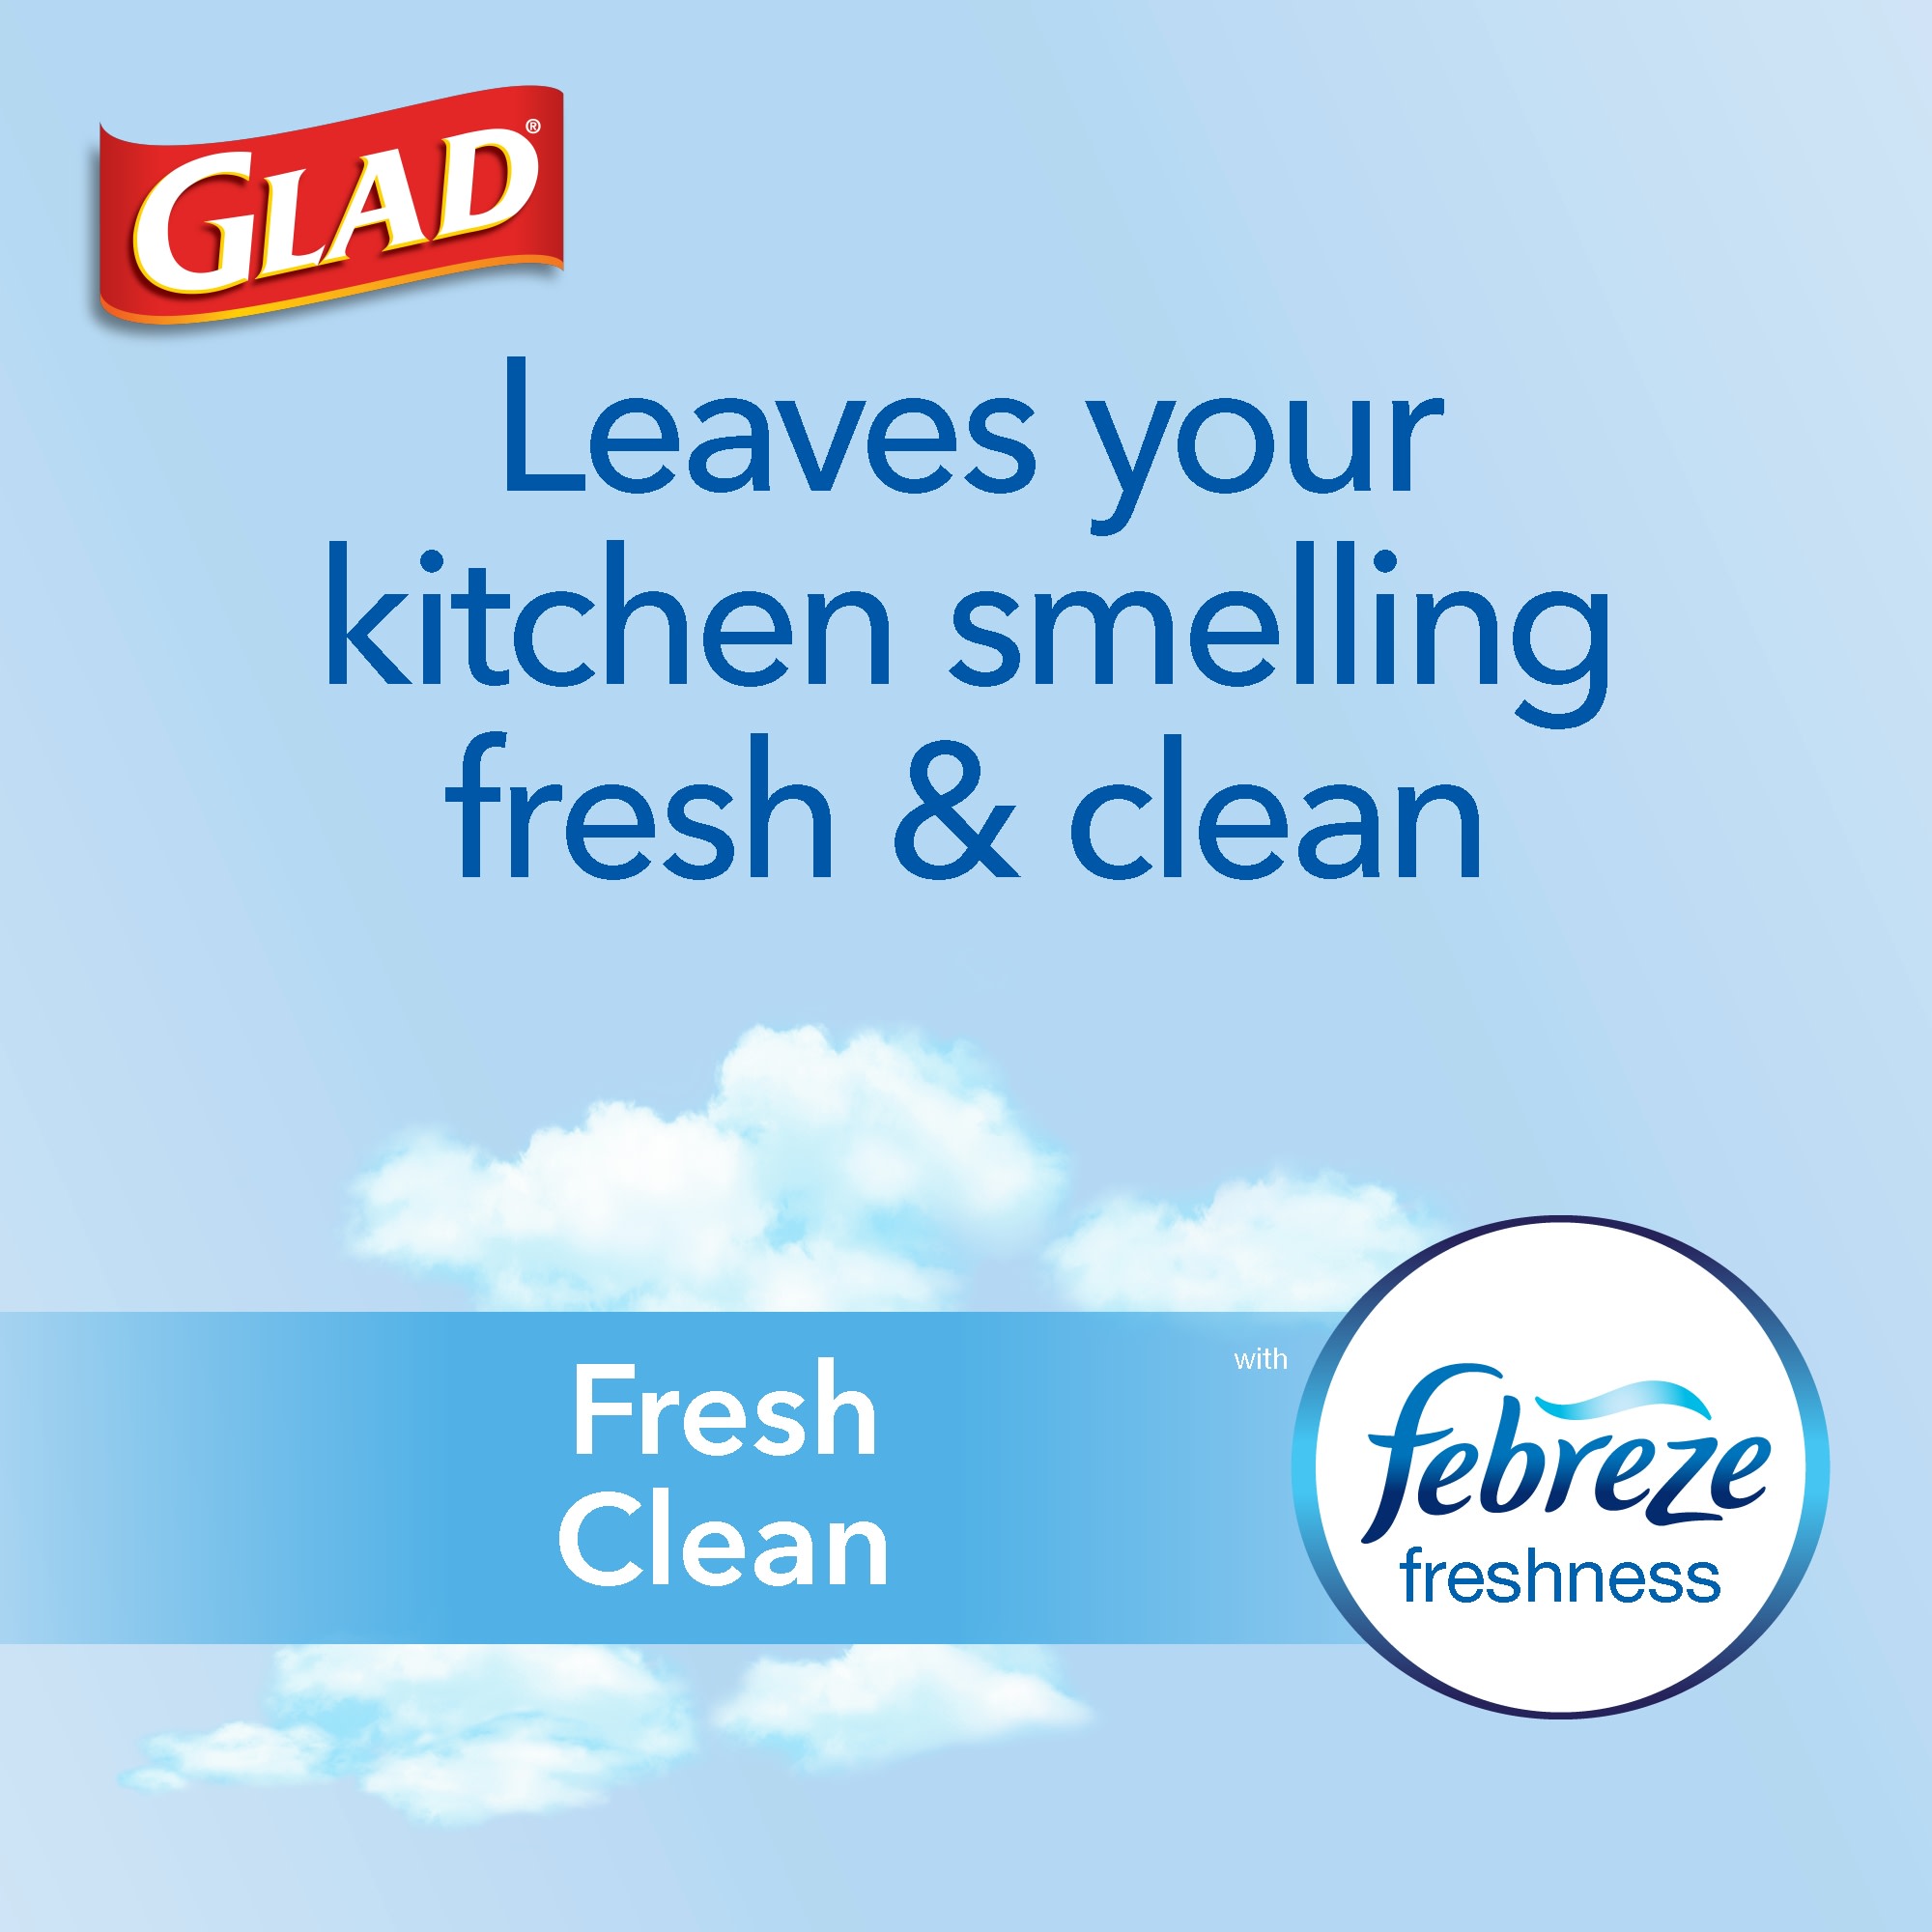 Glad Forceflex Maxstrength Tall Kitchen Drawstring Trash Bags - White  Febreze Fresh Clean - 13 Gallon/45ct : Target